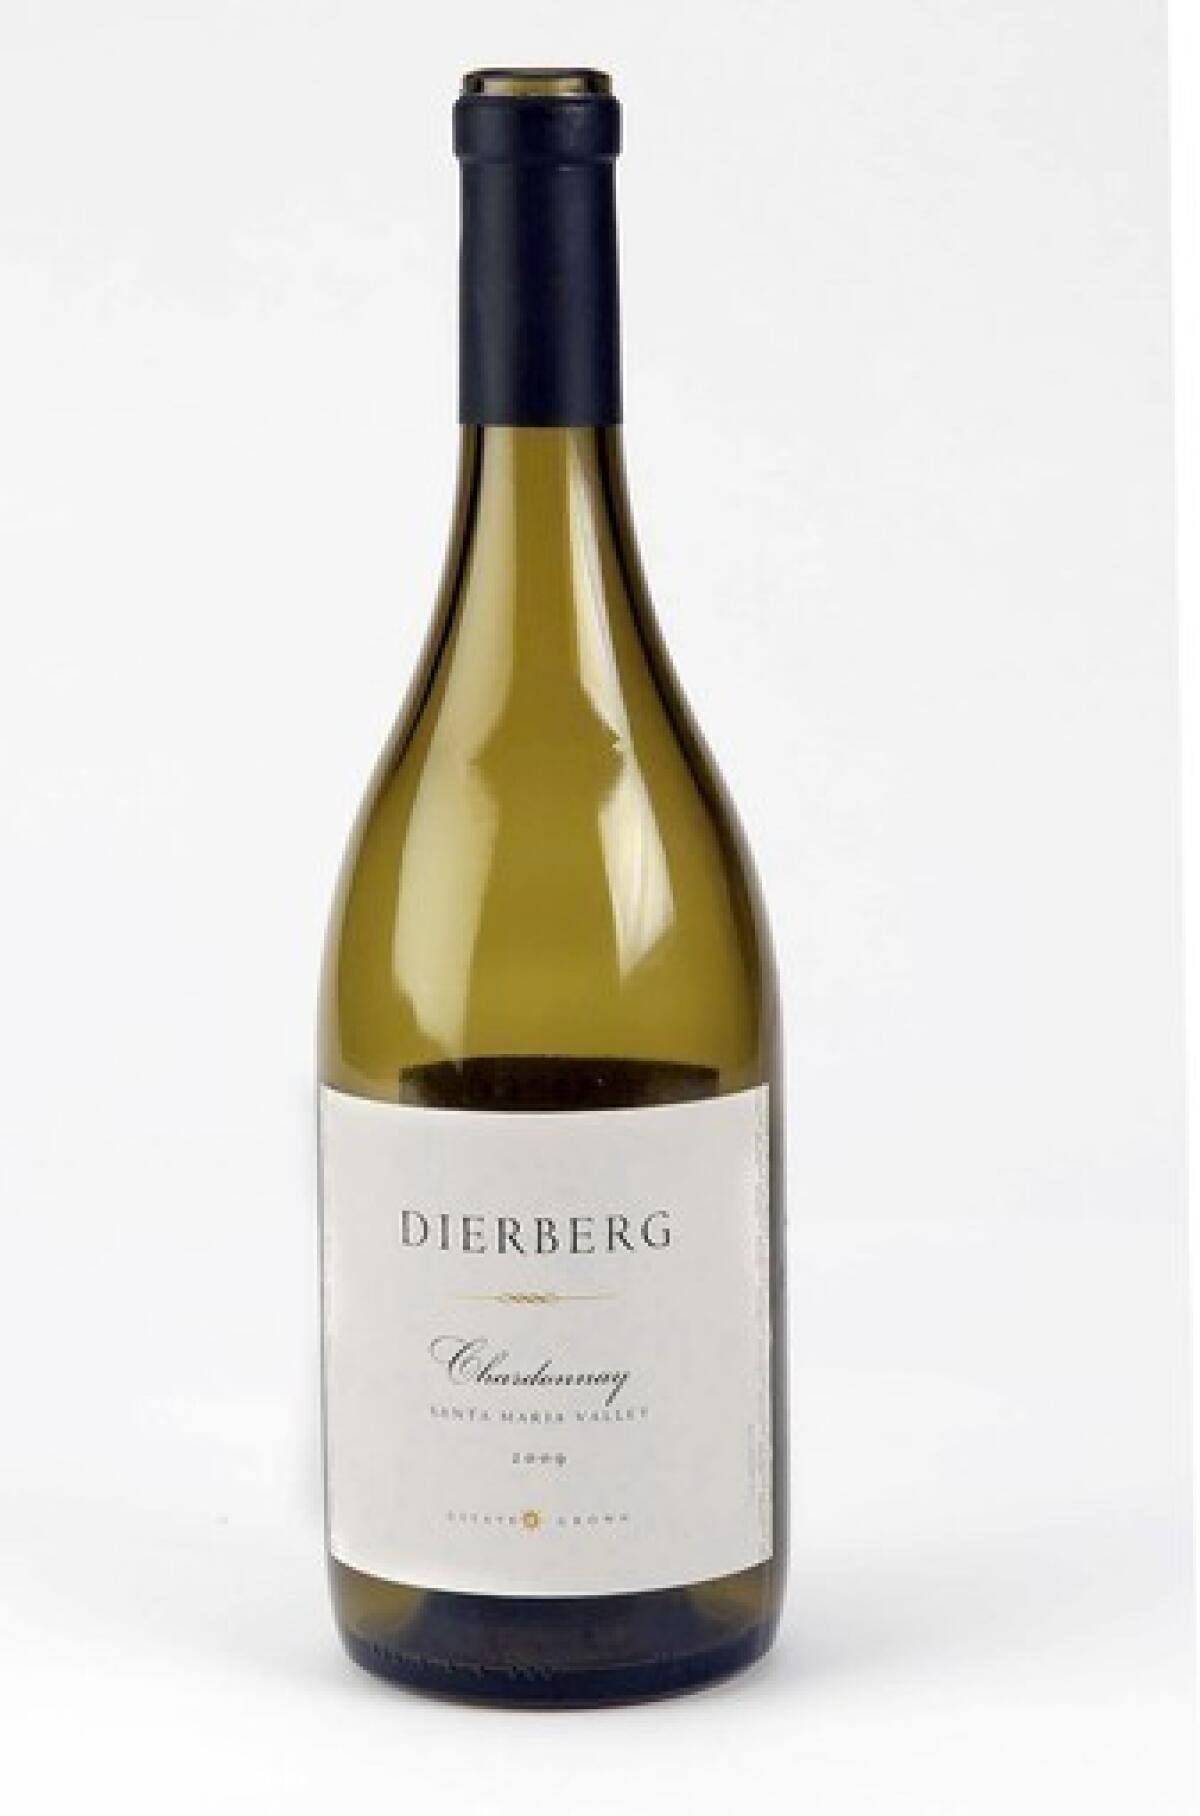 2009 Dierberg Chardonnay.